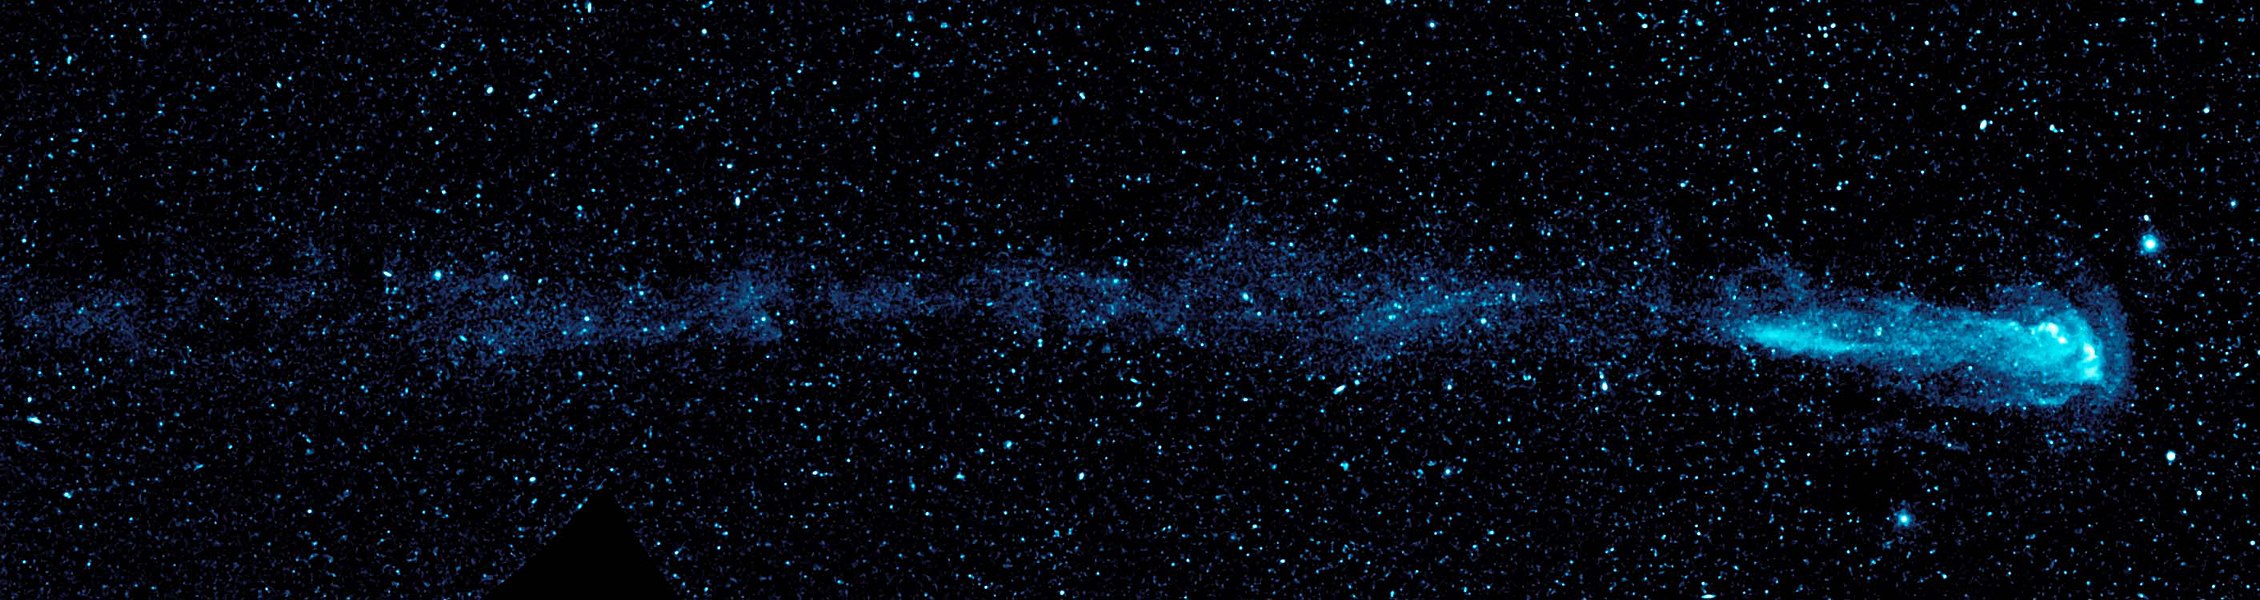 Height 400px. Galex телескоп снимки. Омикрон кита звезда. Космос звезды панорама.